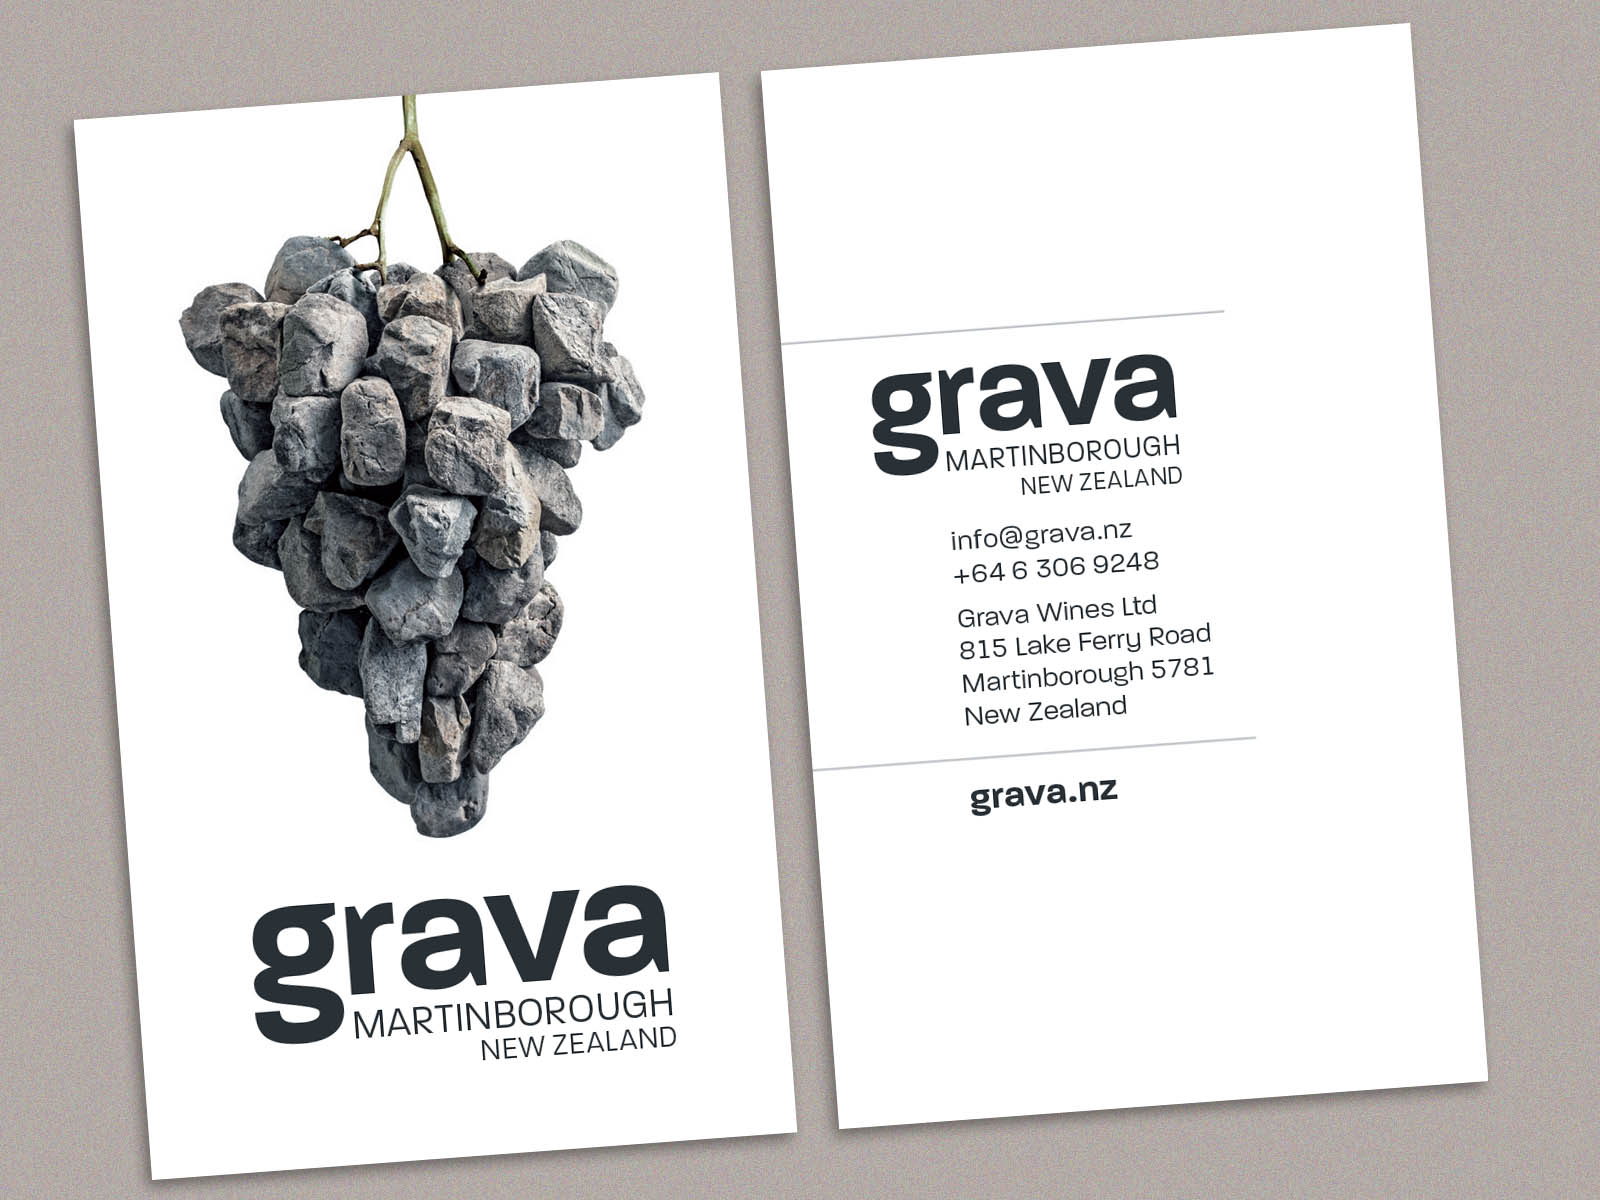 Photo shows Grava business cards.